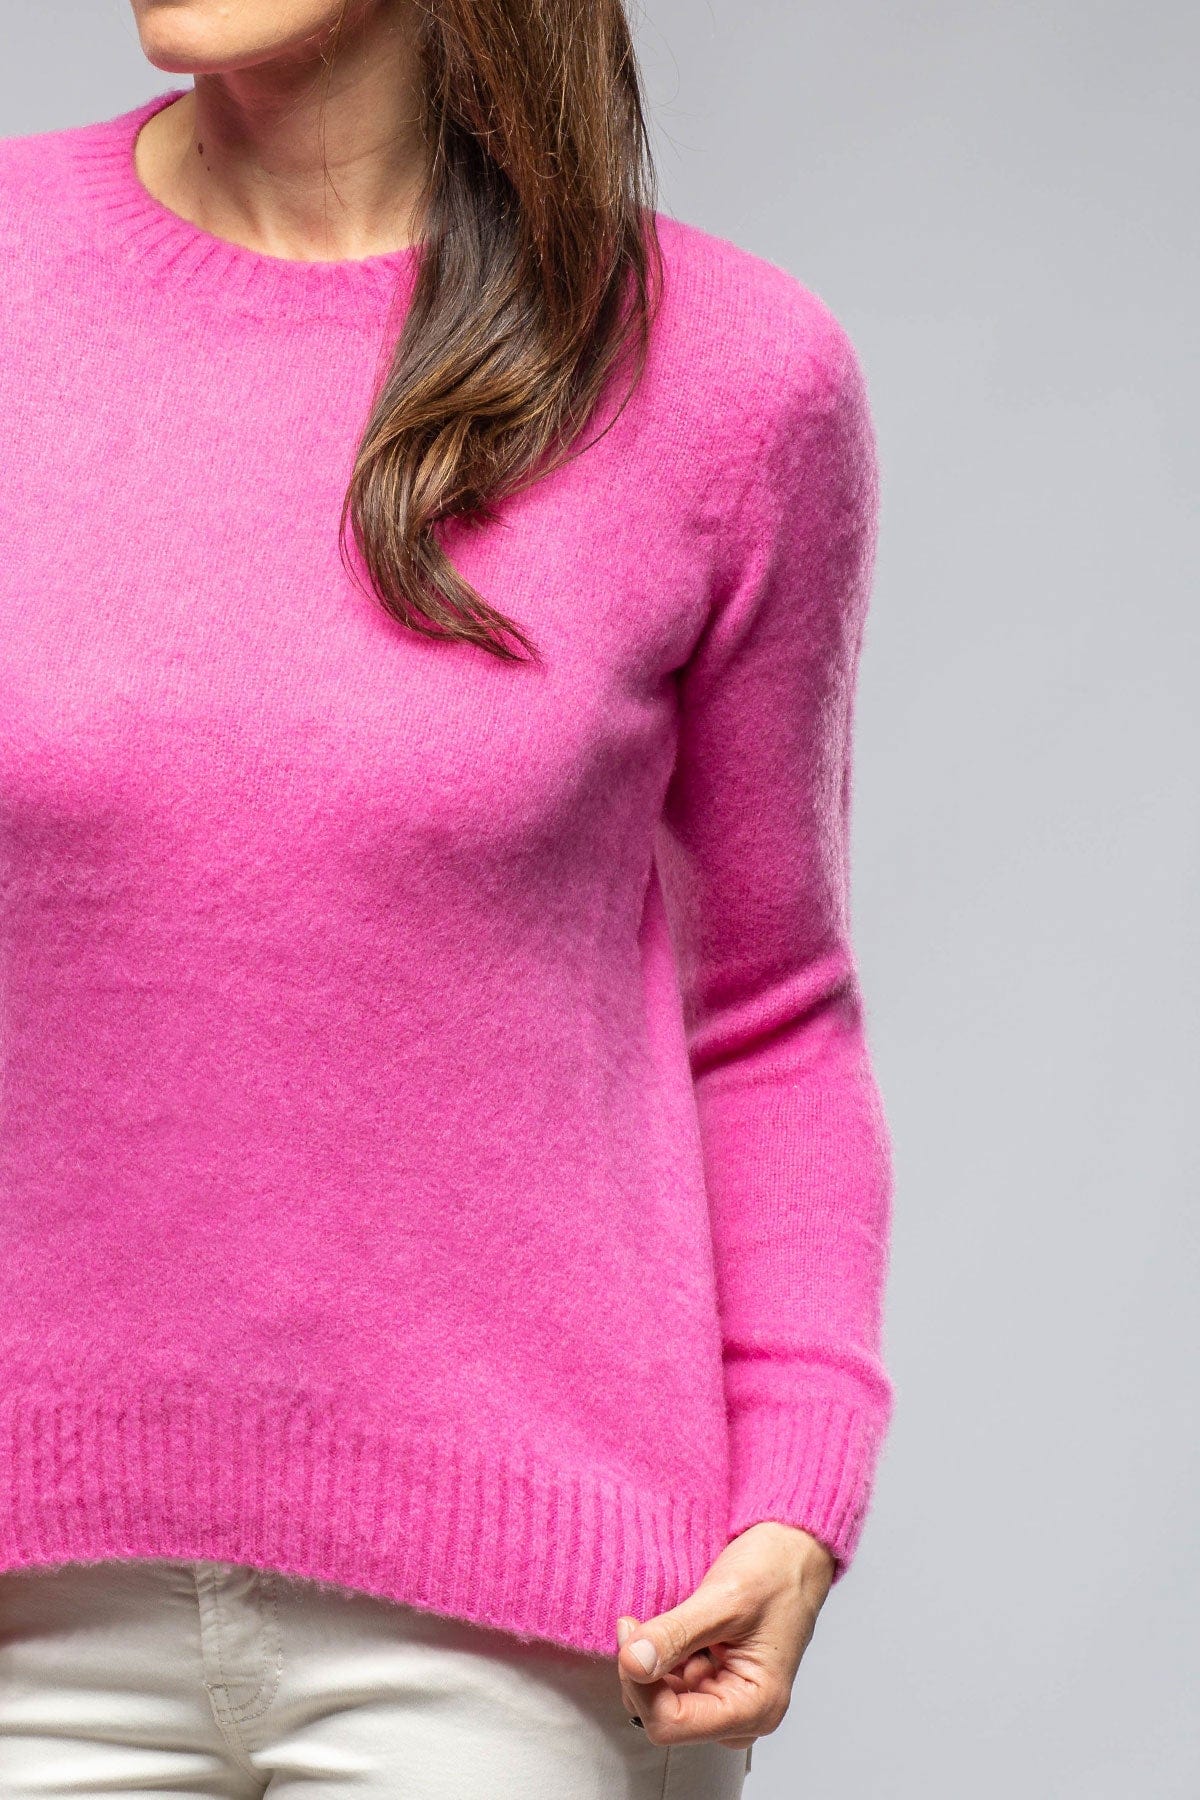 Merit Sweater in Abelia - AXEL'S